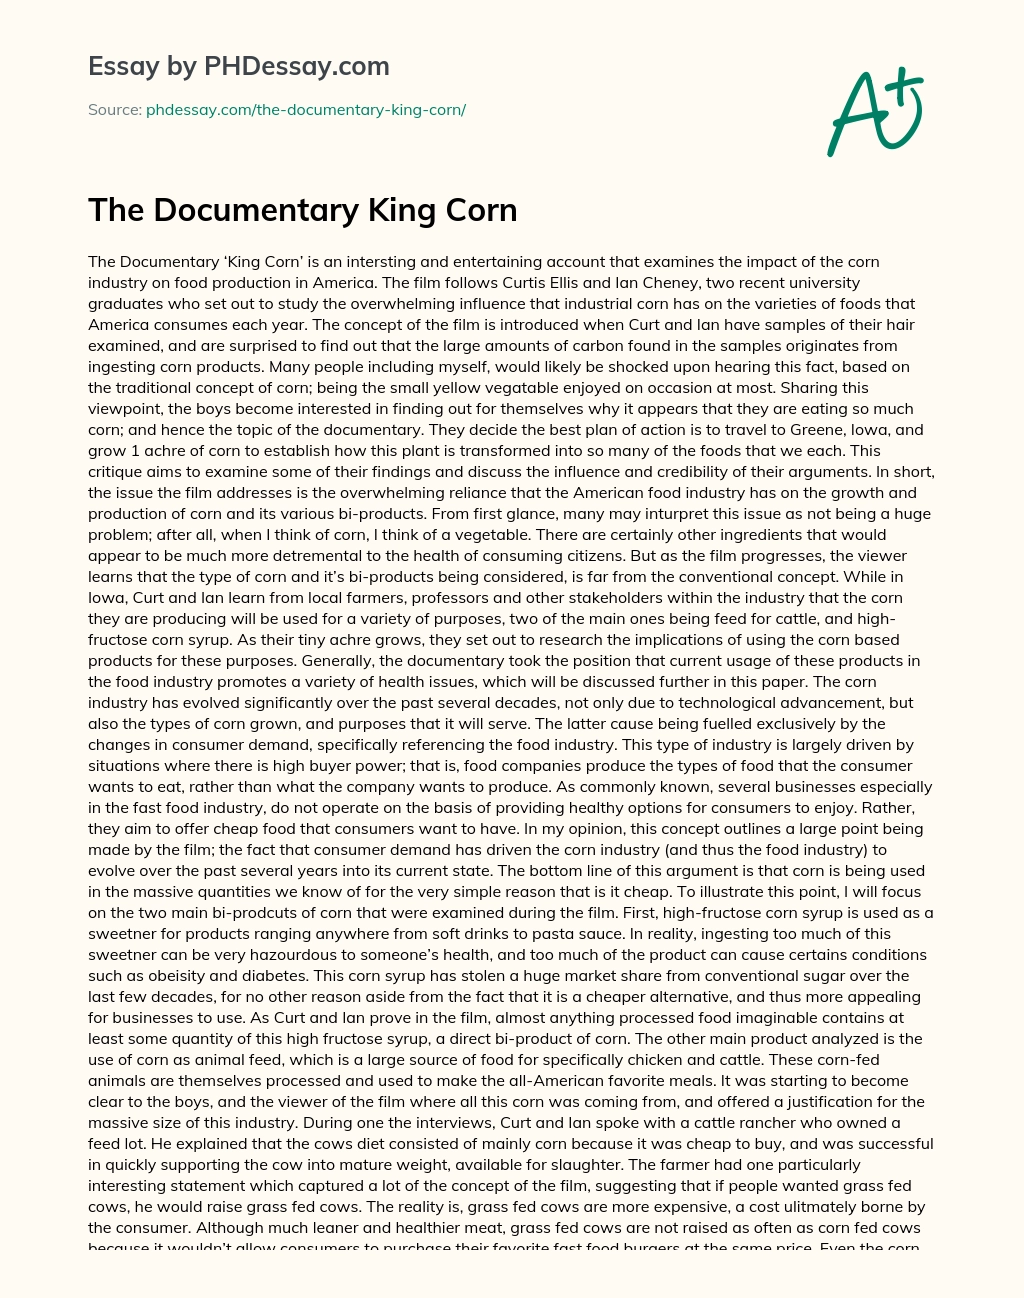 The Documentary King Corn essay